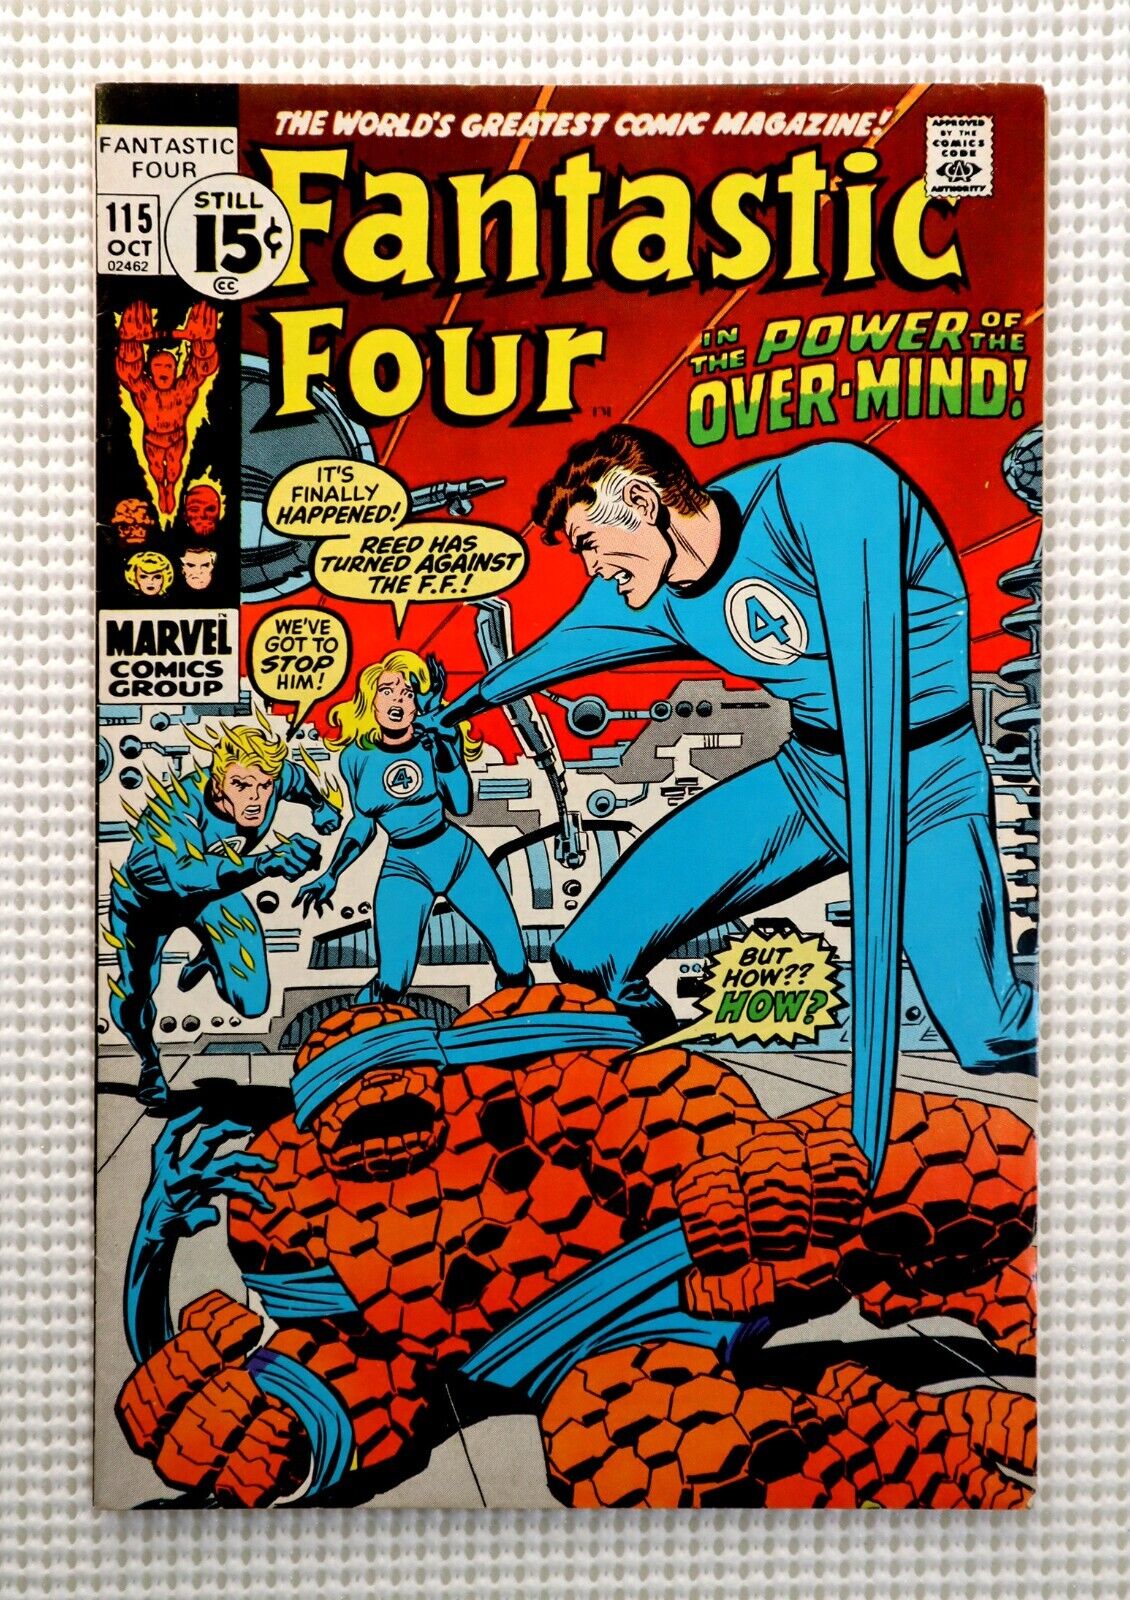 MID-HIGH GRADE 1970 Fantastic Four 115 Marvel Comics: Bronze Age/15 cent cover